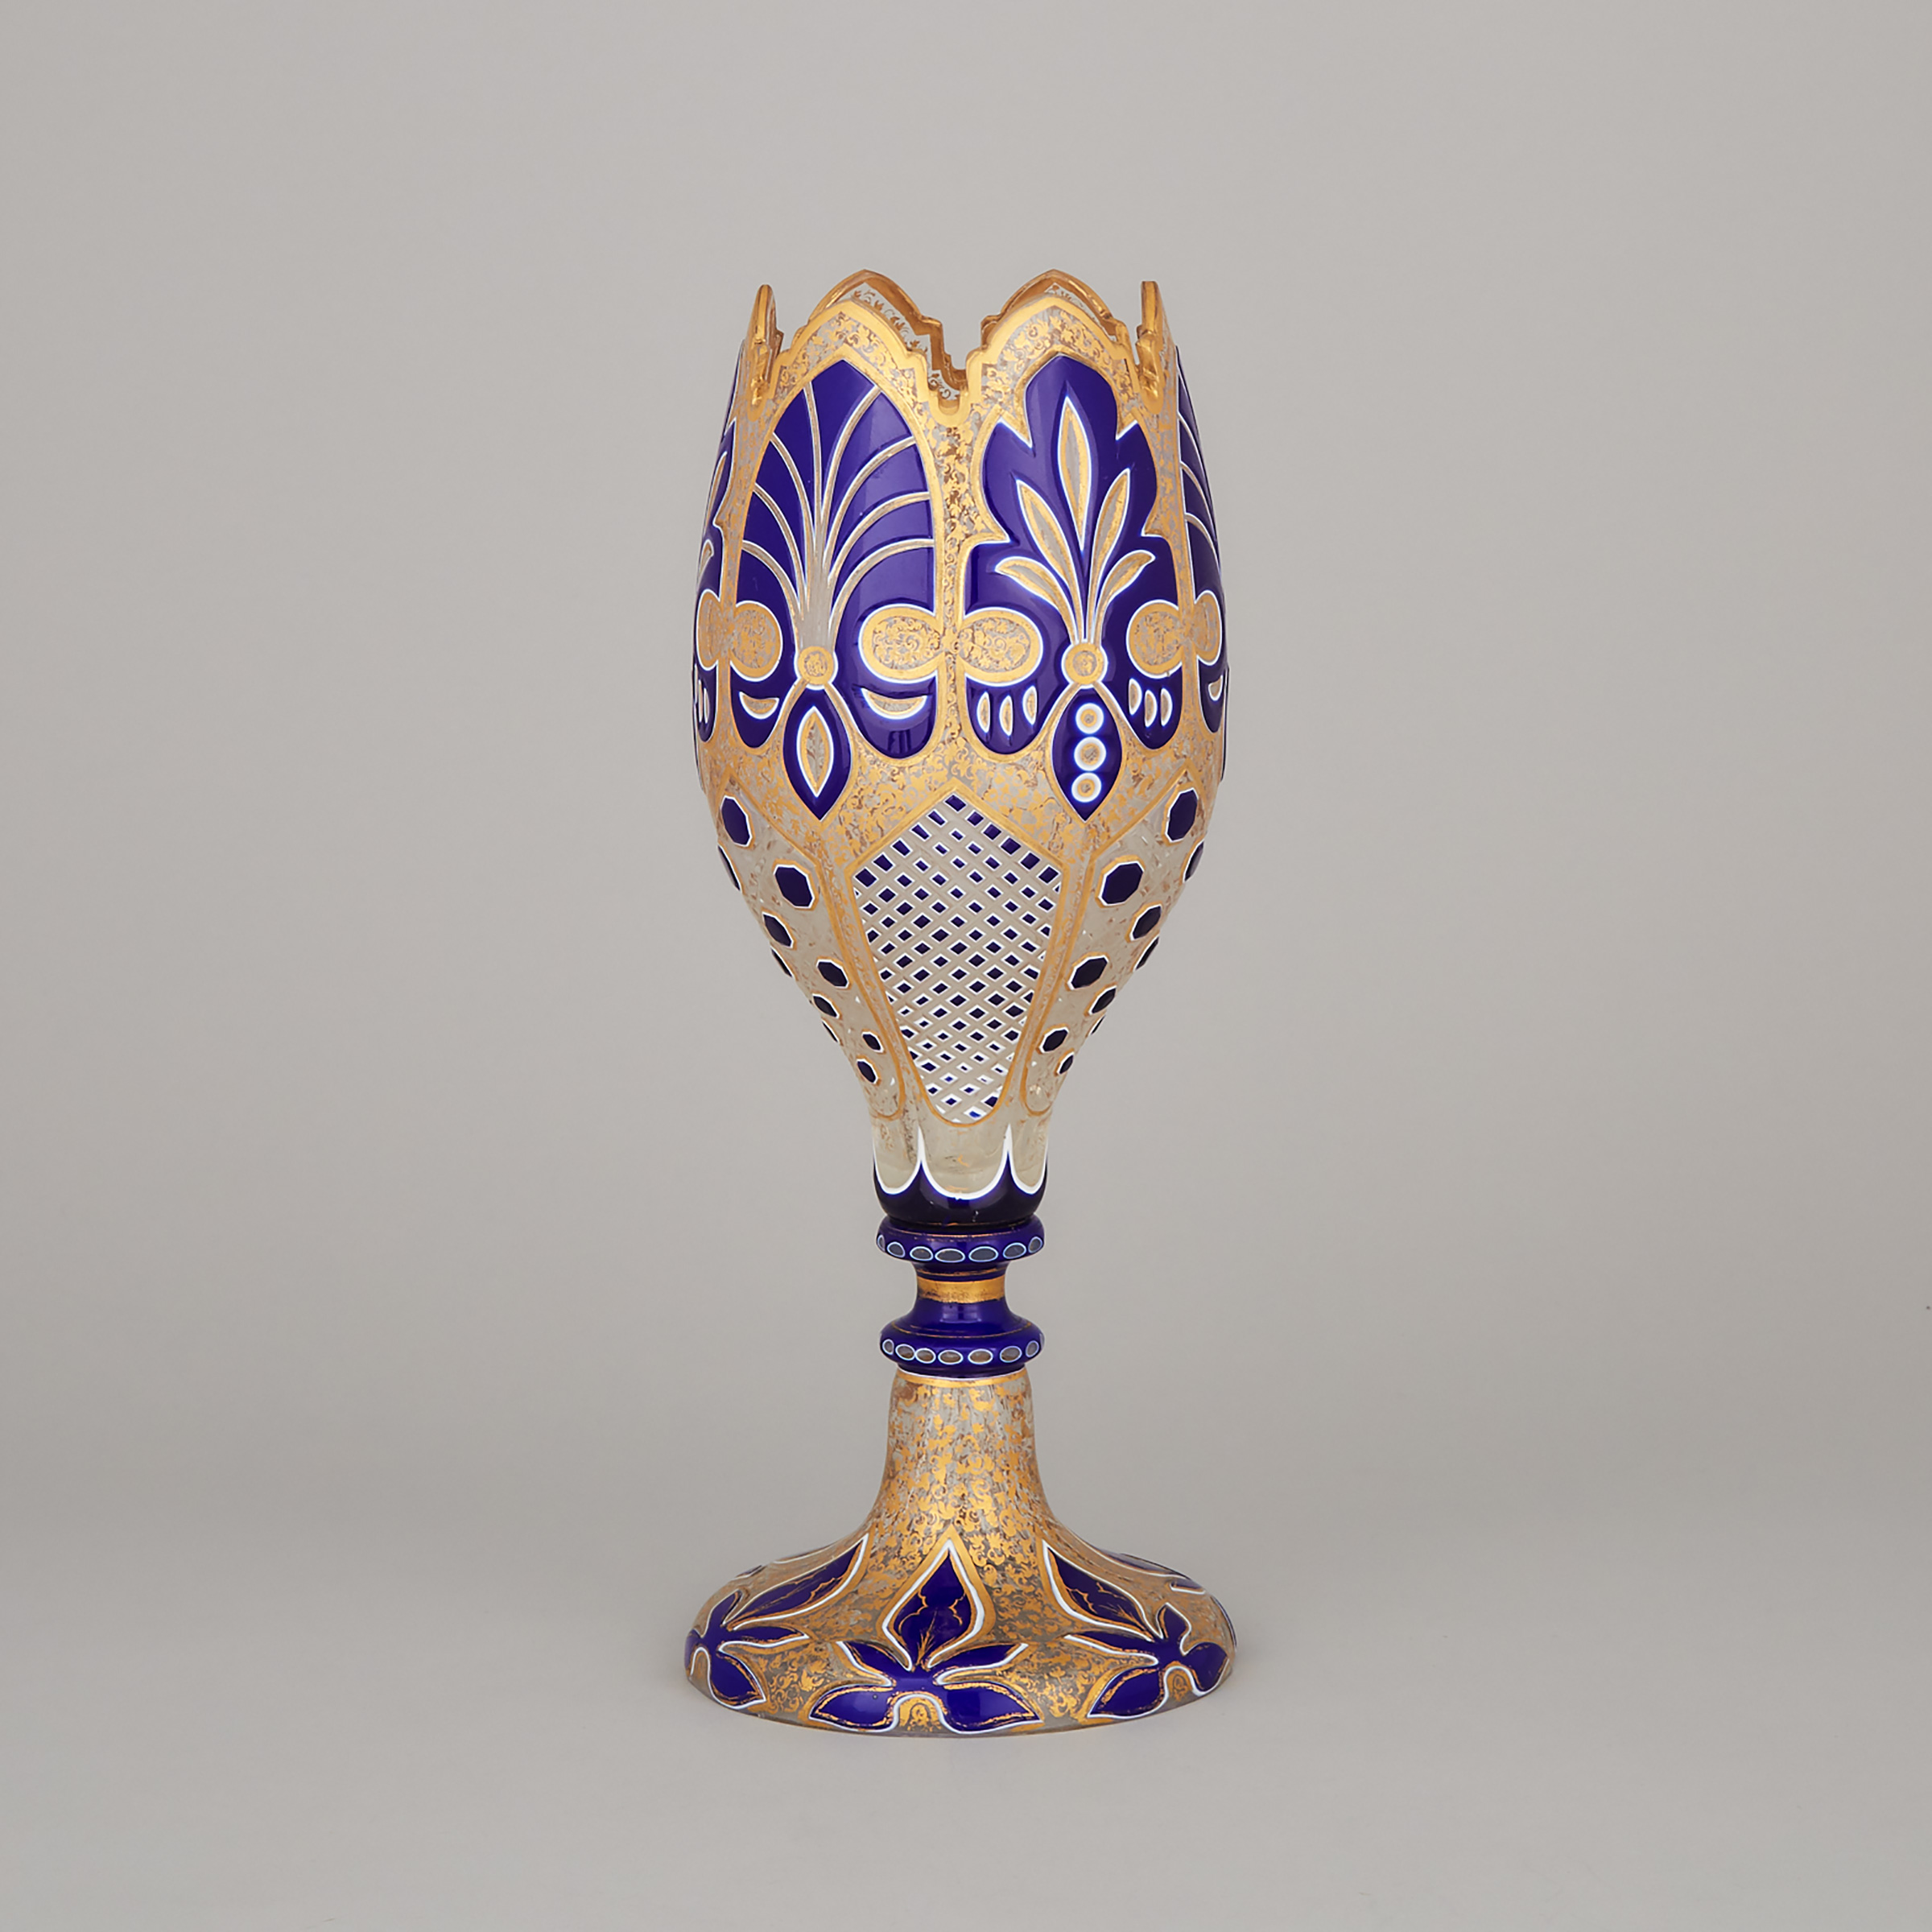 Bohemian Blue Overlaid and Gilt Glass Vase, late 19th century